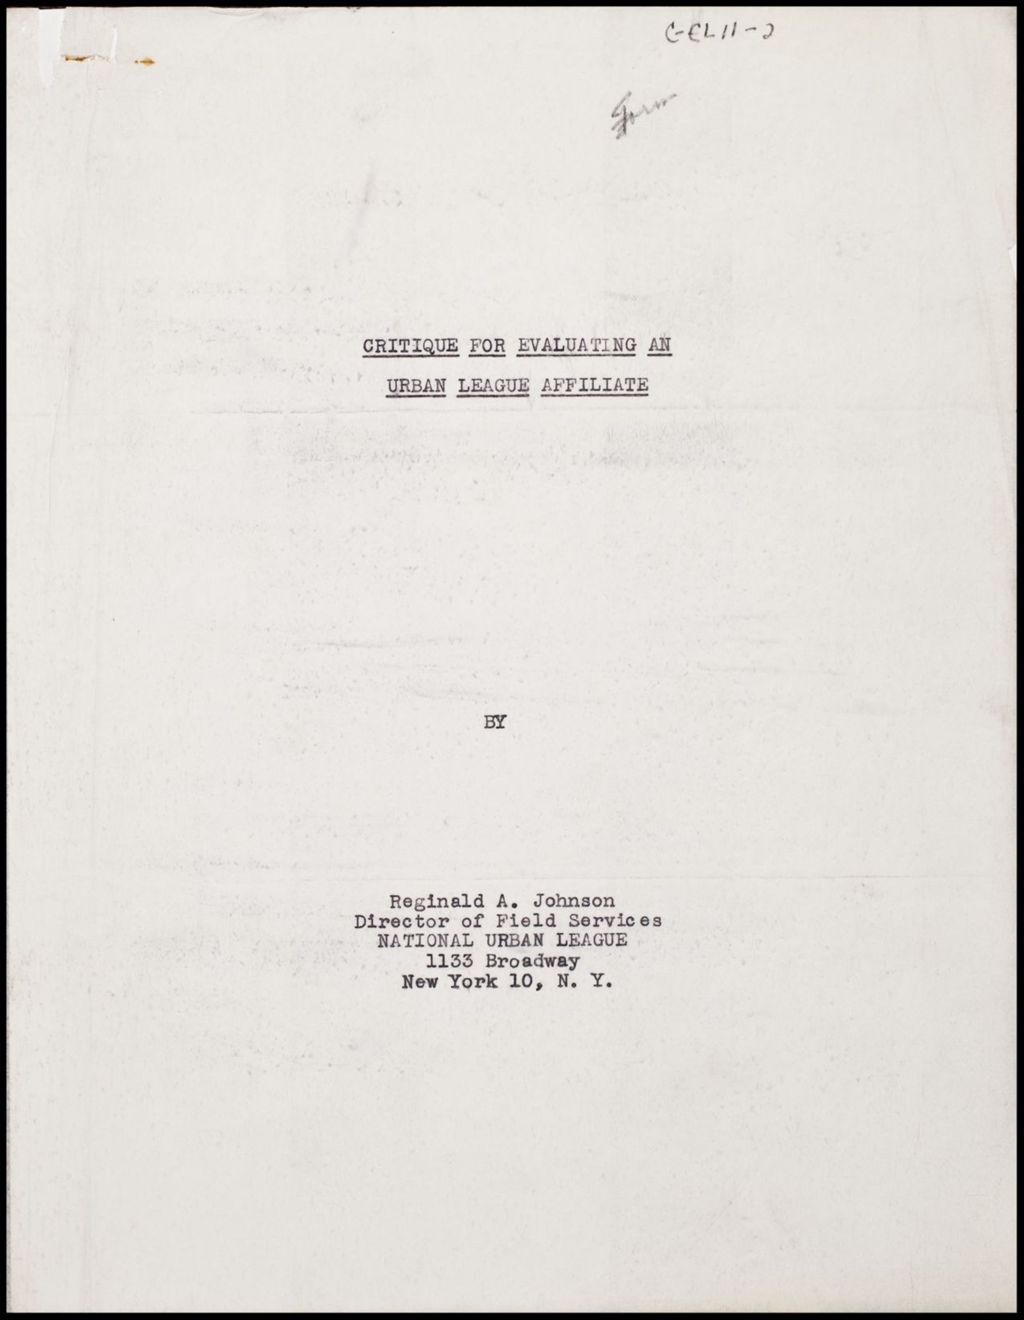 Miniature of Critique for evaluating an Urban League affiliate, undated (Folder I-3285)